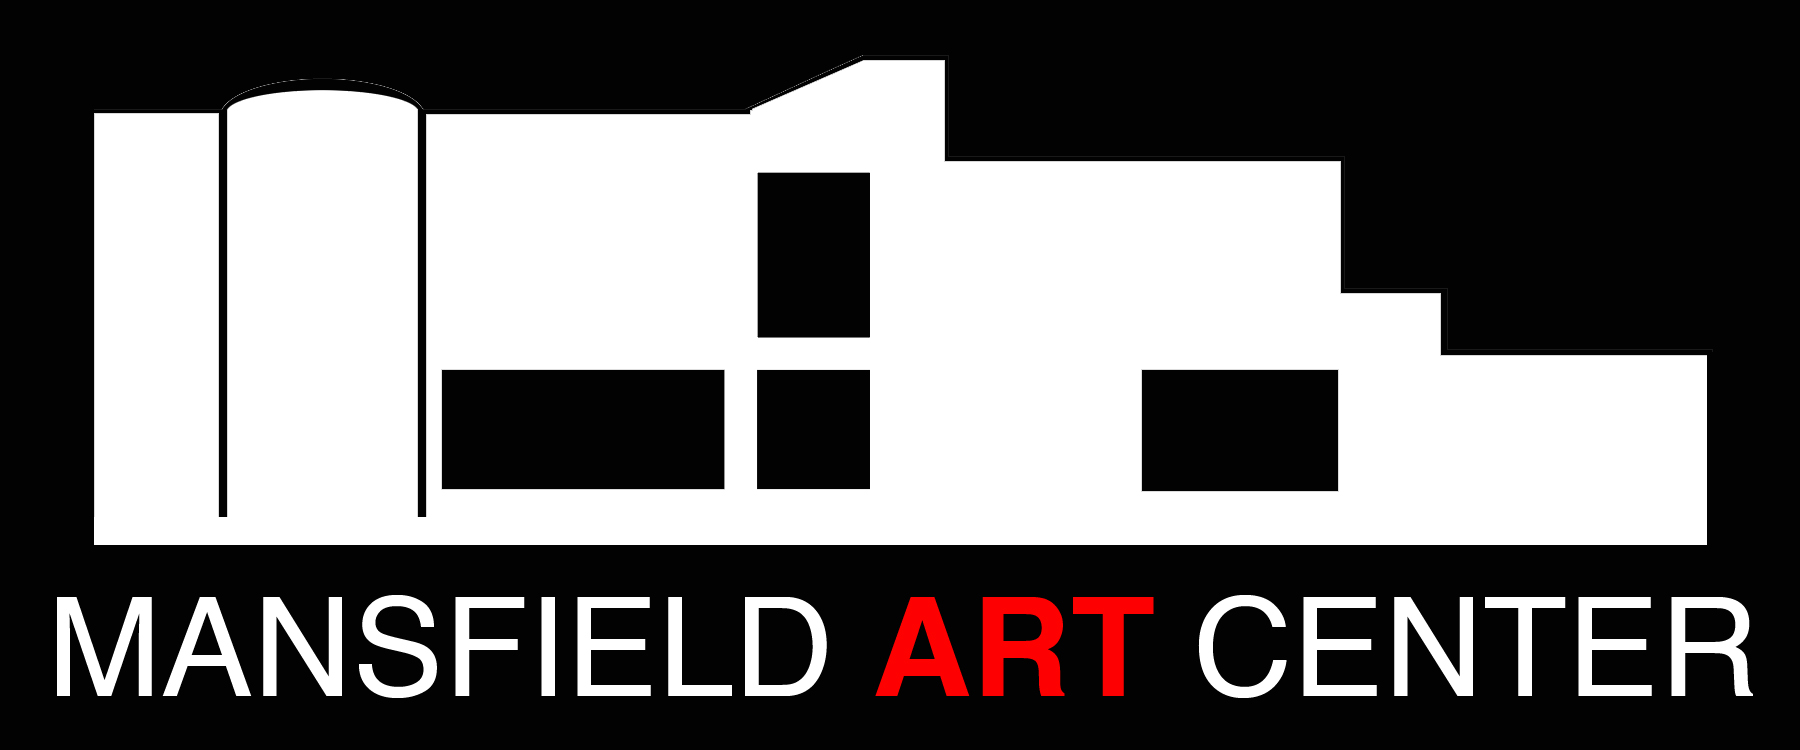 The Mansfield Art Center logo